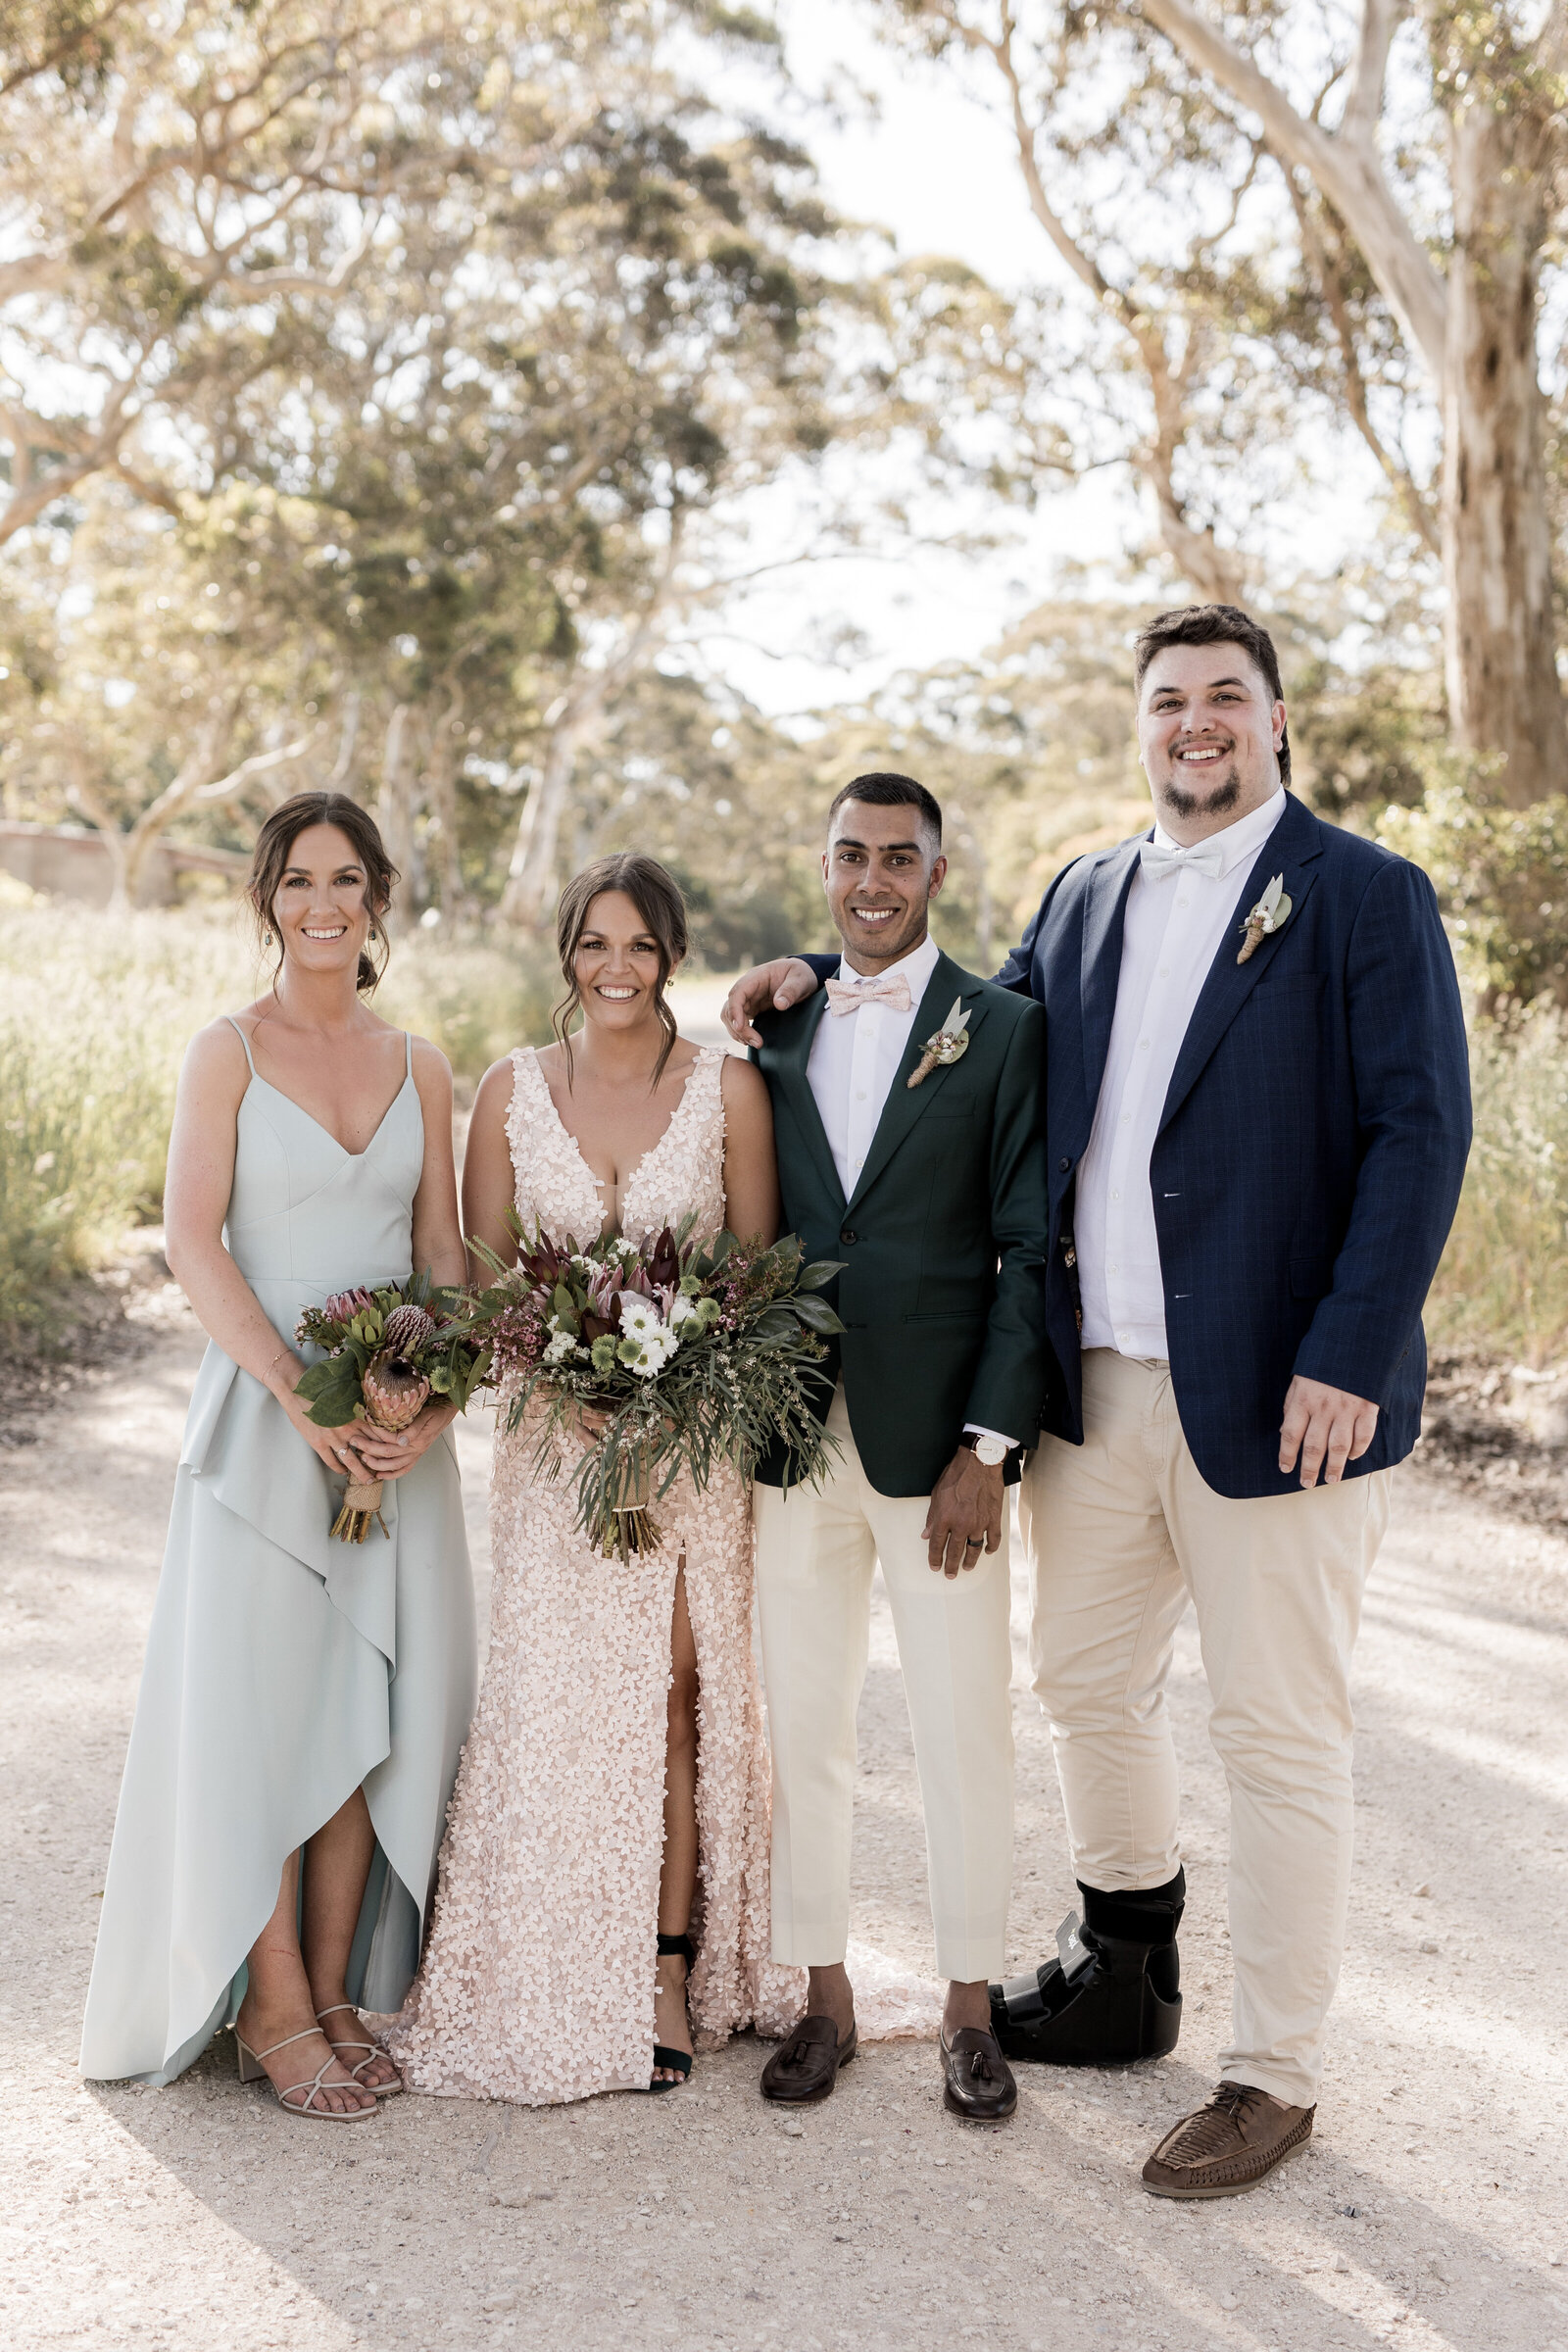 Chloe-Benny-Rexvil-Photography-Adelaide-Wedding-Photographer-298